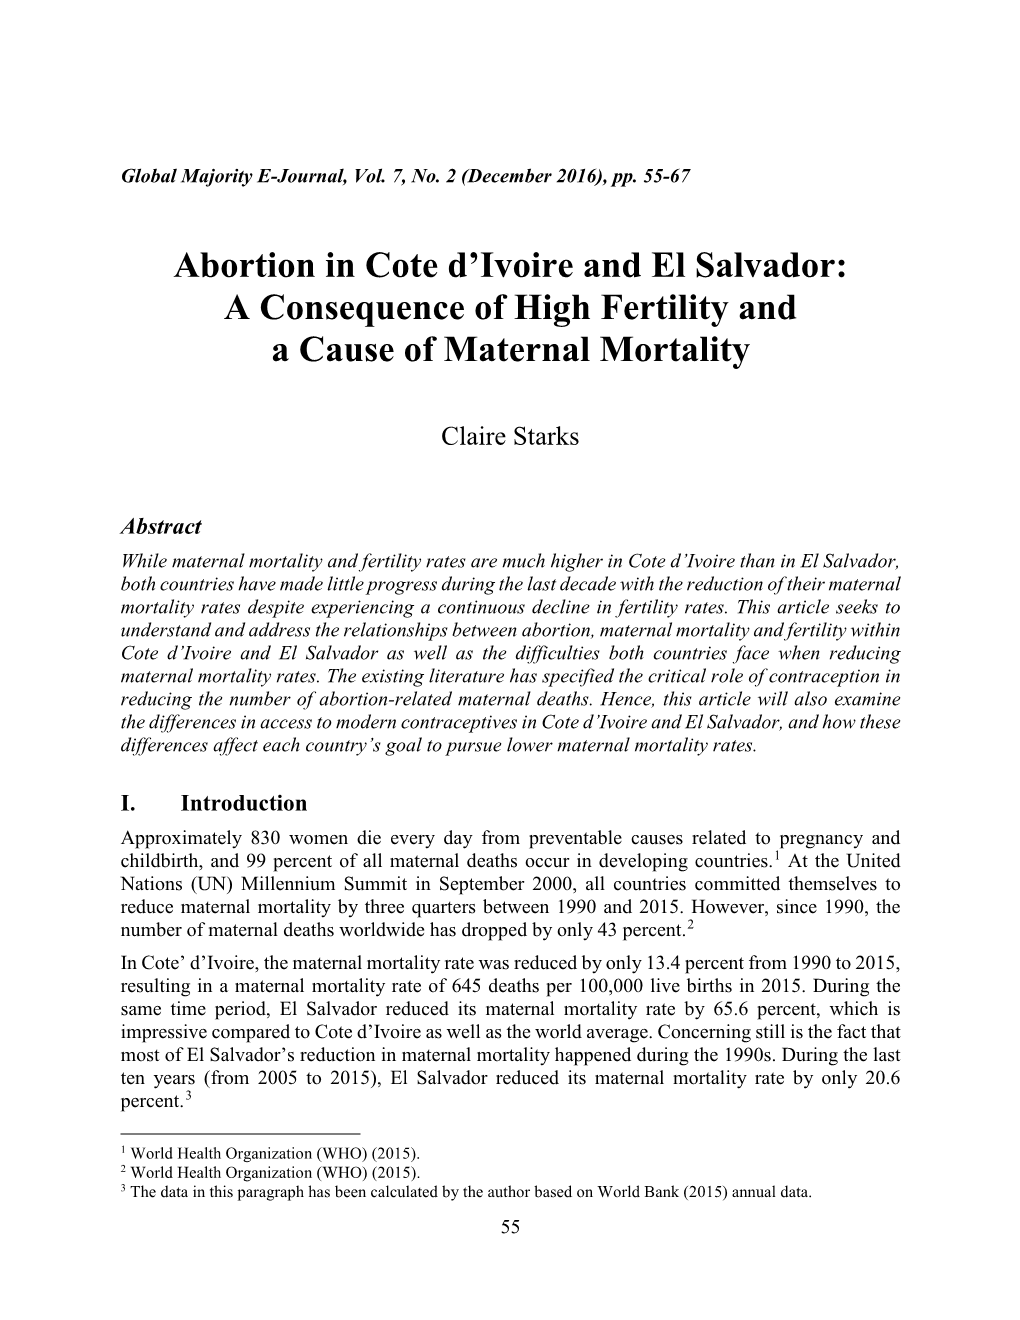 Abortion in Cote D'ivoire and El Salvador